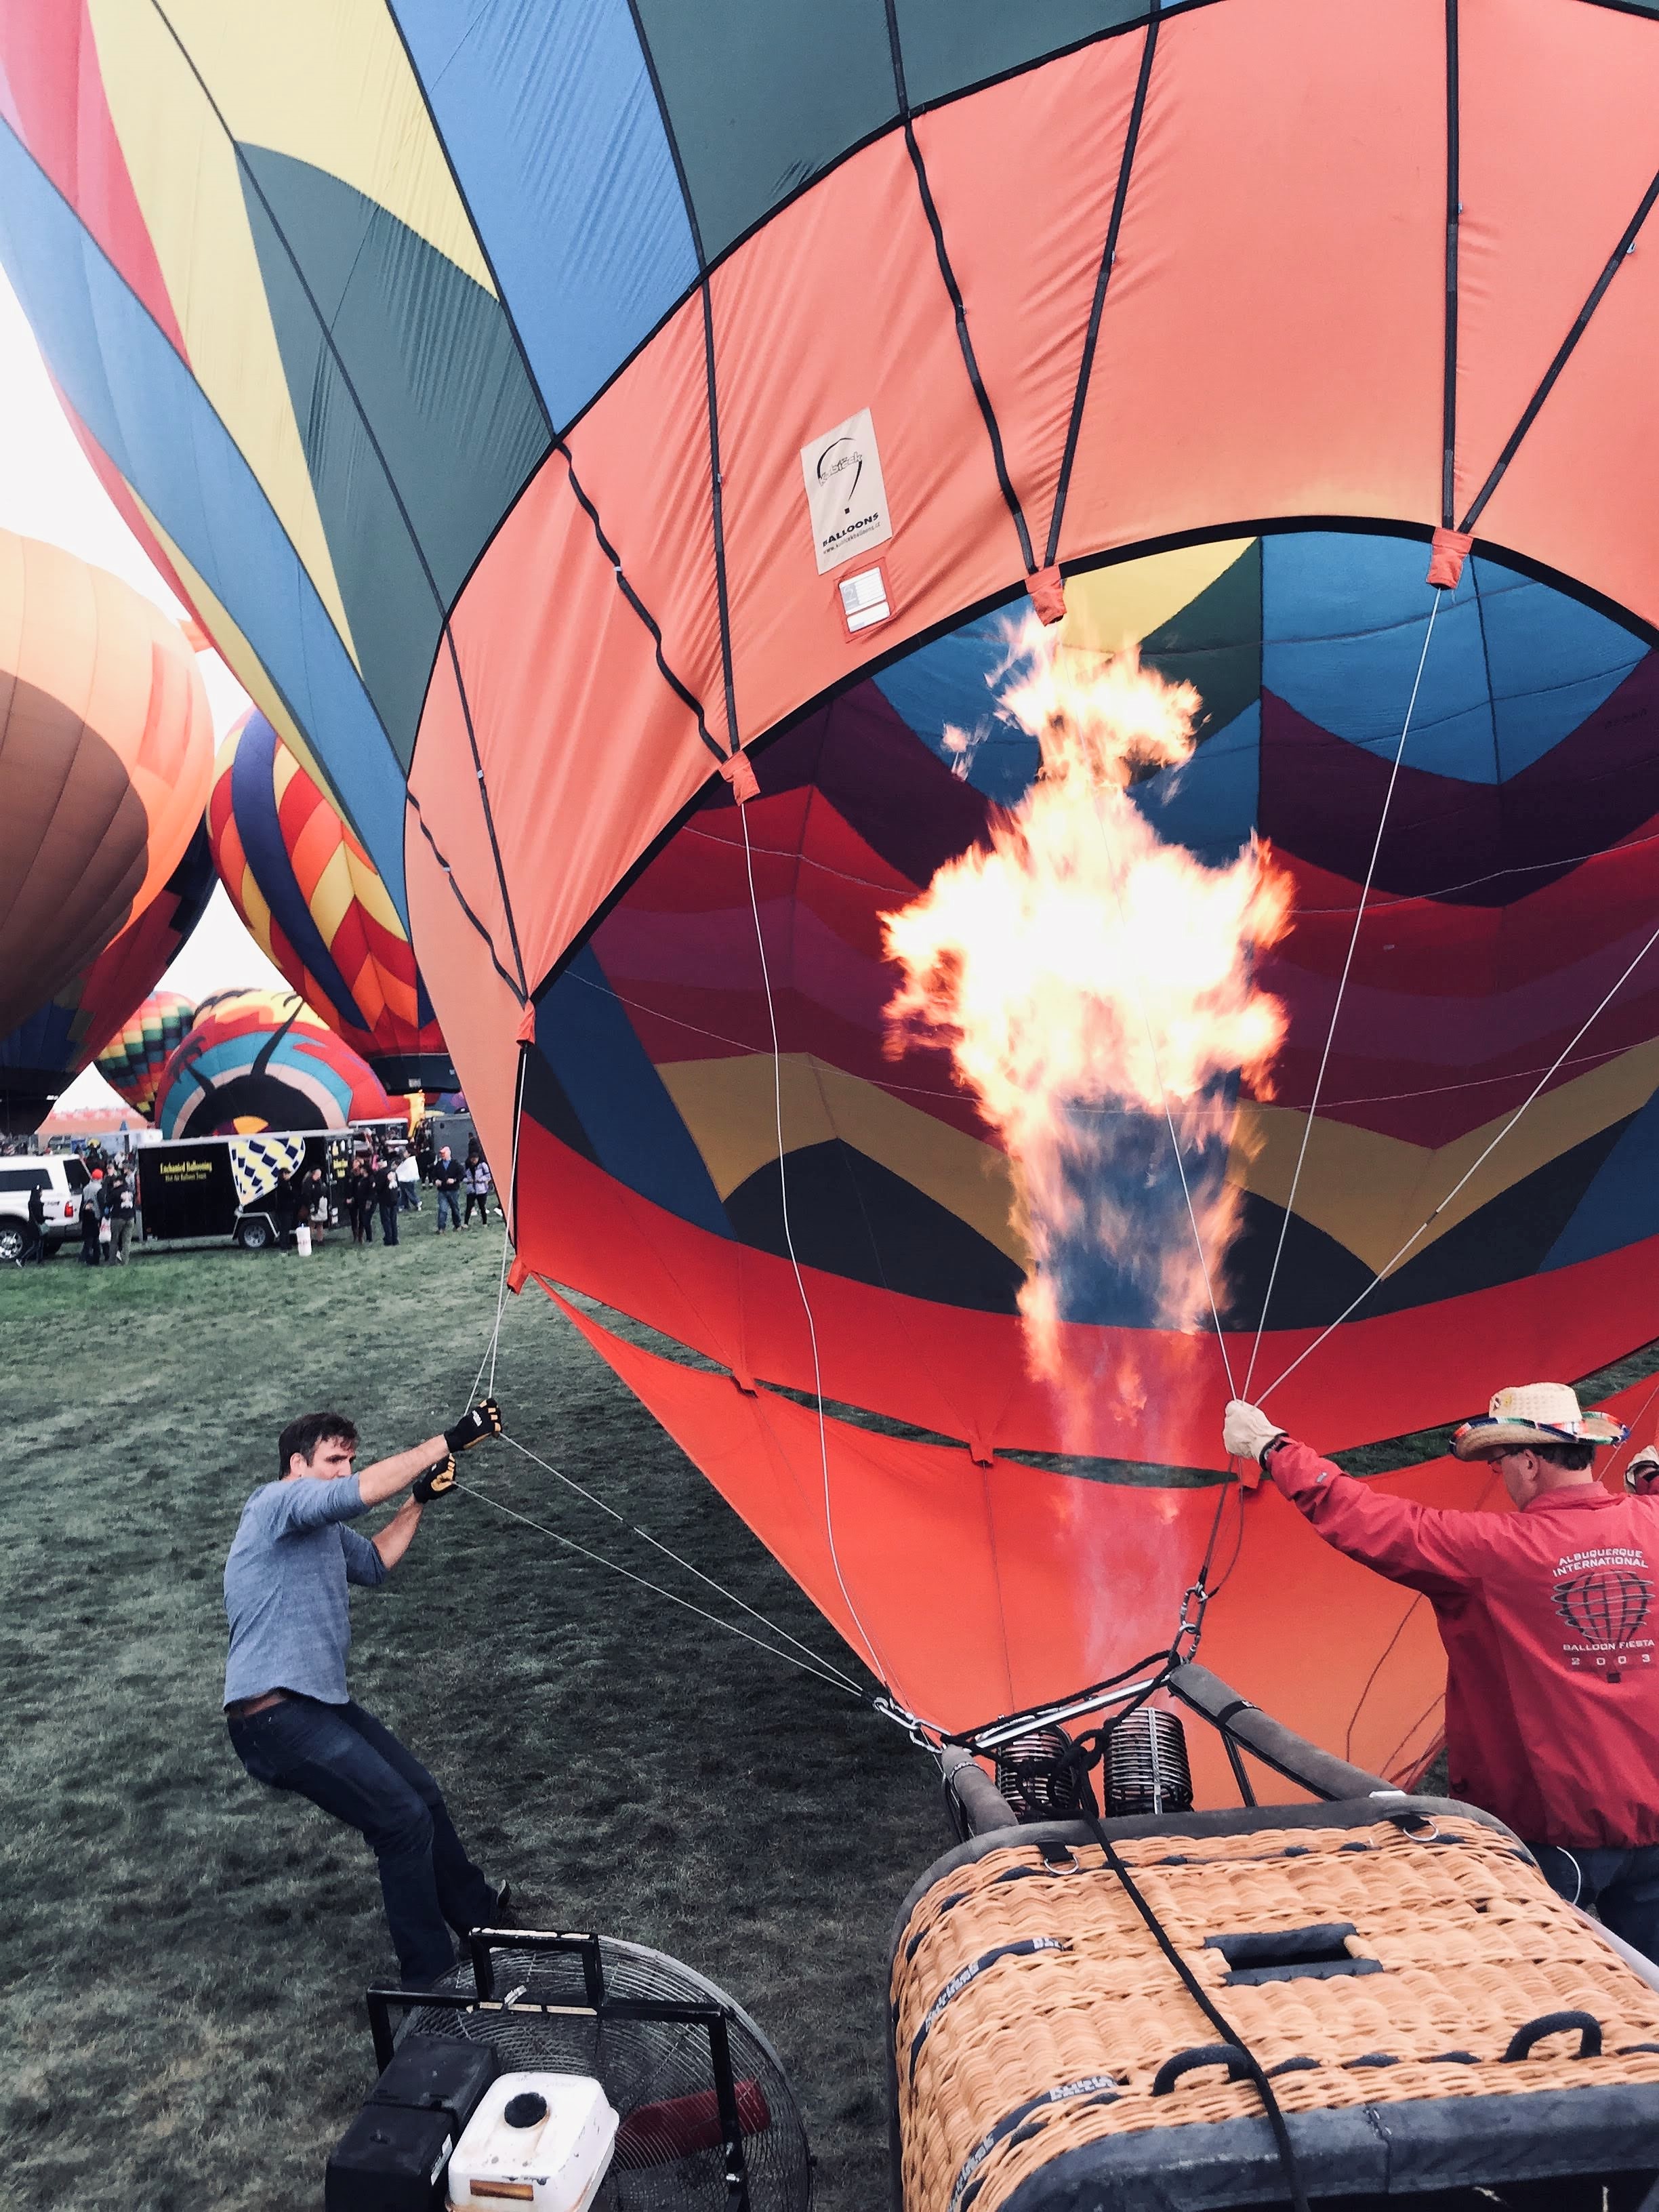 going hot - Albuquerque International Balloon Fiesta - TravelsWithSuz.com